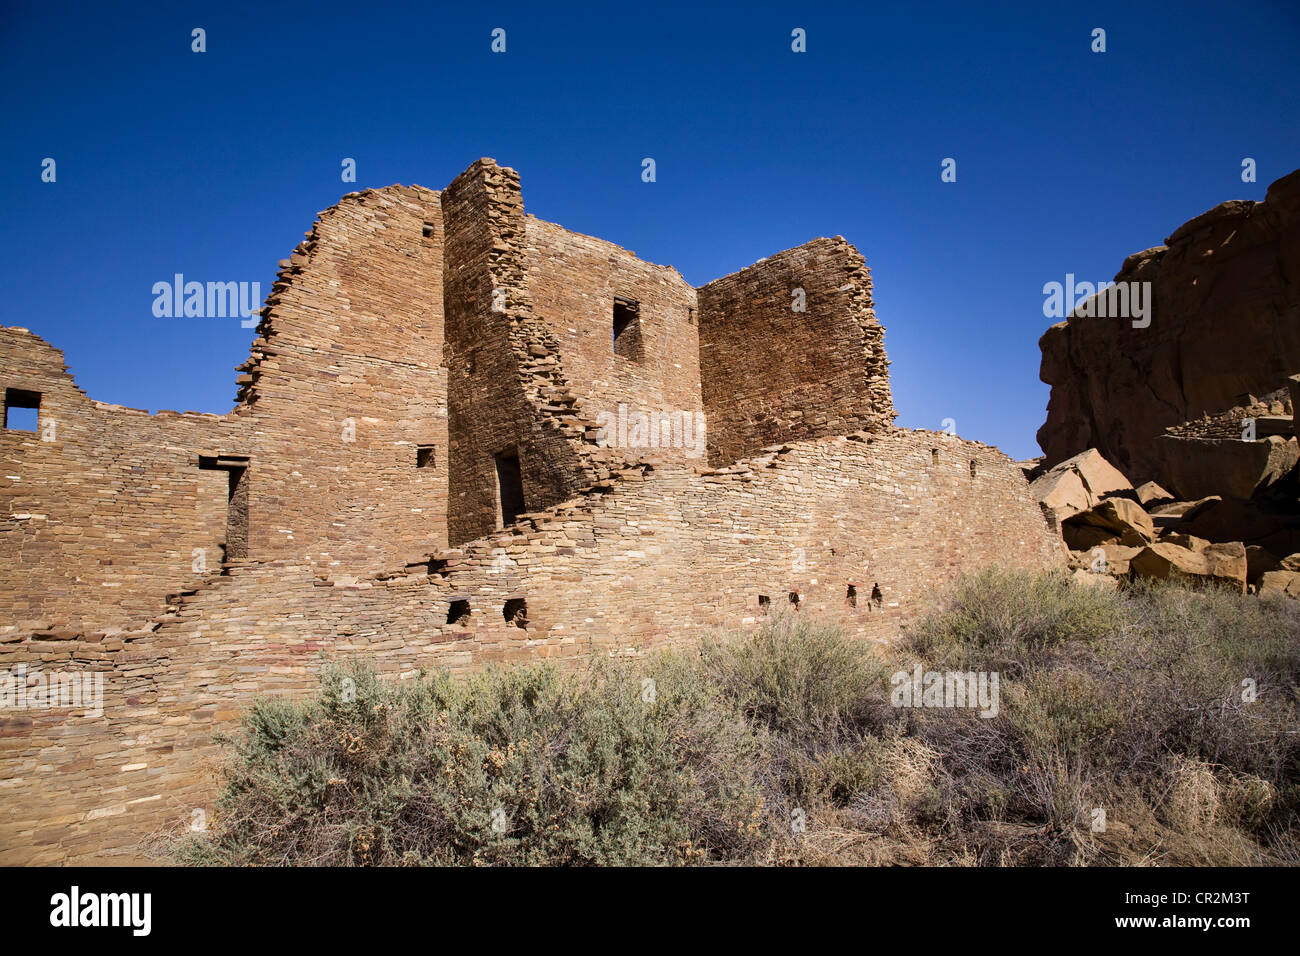 Die Sandsteinmauern des großen Hauses Anasazi Pueblo Bonito, Chaco Canyon National Historical Park, New-Mexico Stockfoto